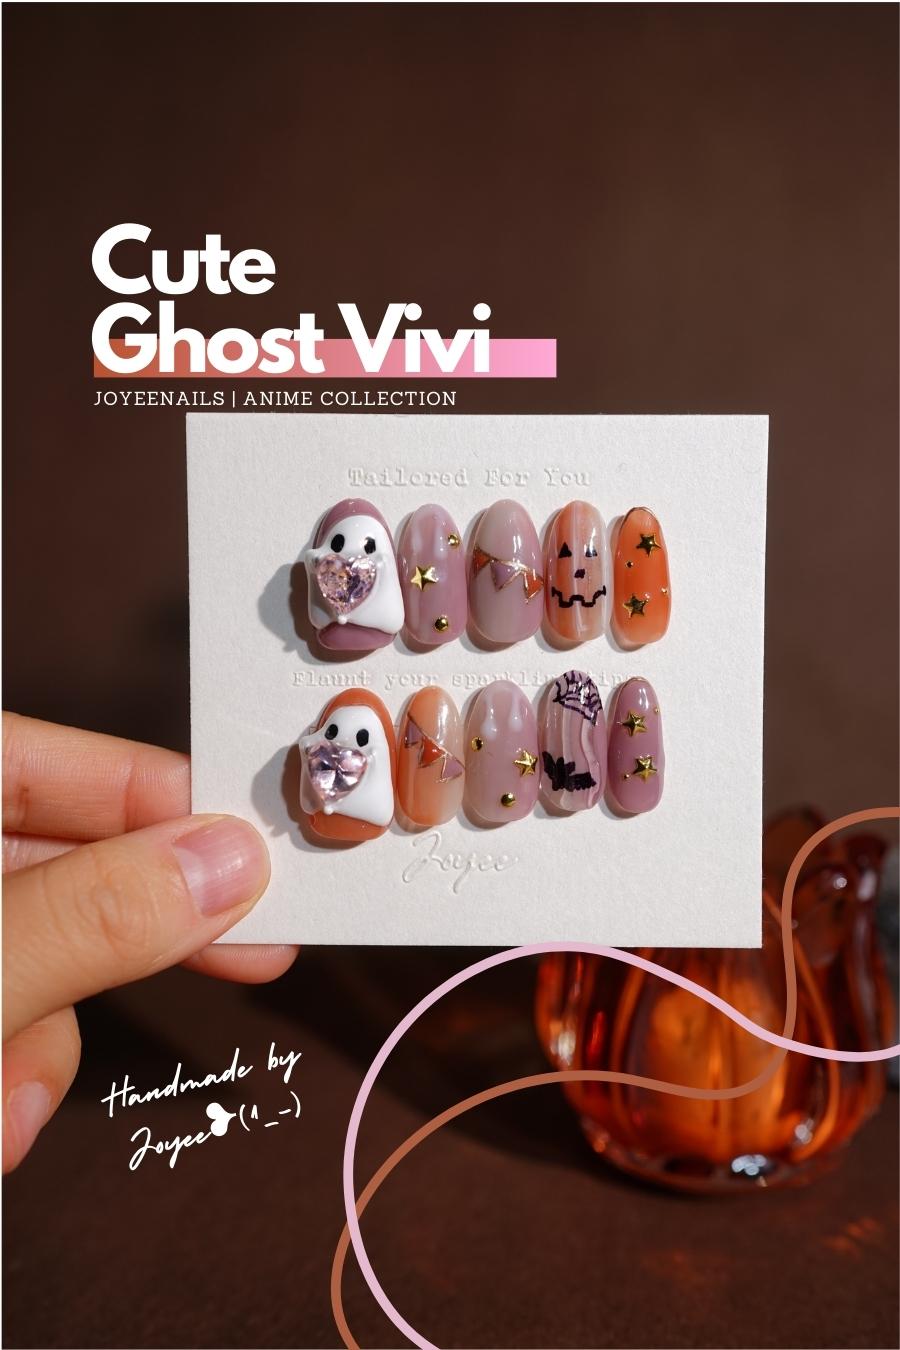 Joyee-handmade-press-on-nails-cute-ghost-vivi